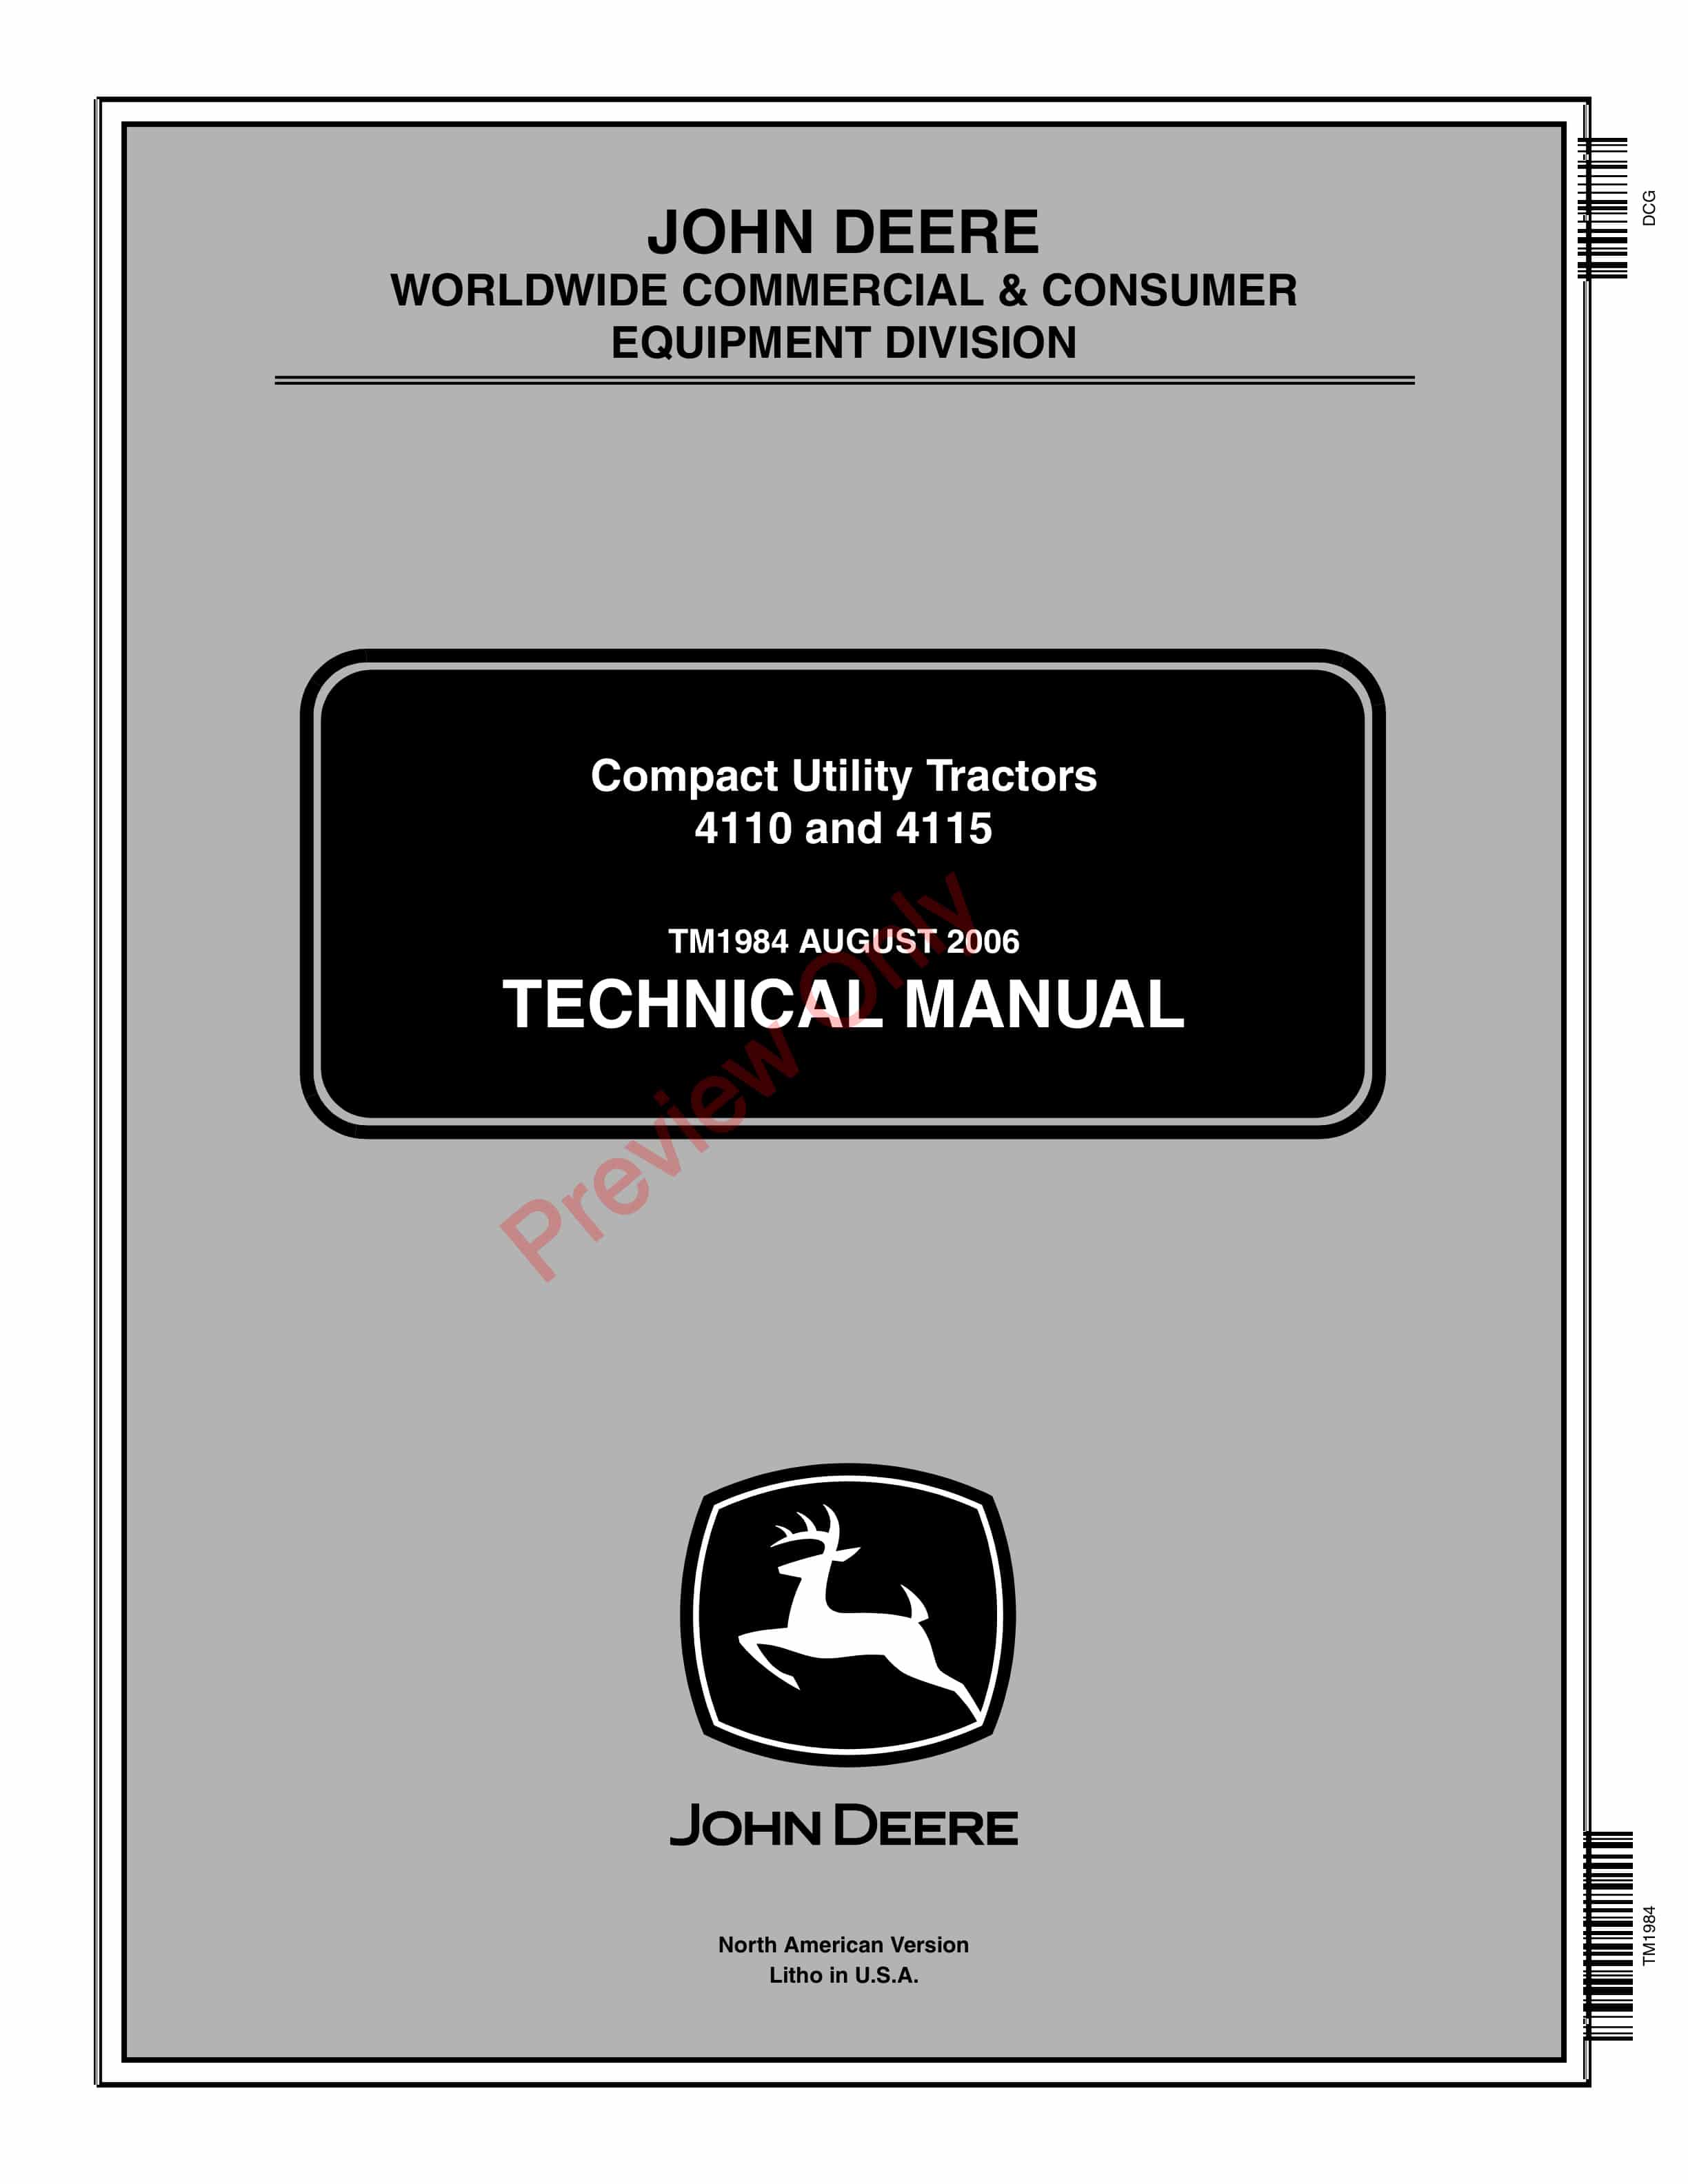 John Deere 4110 4115 Compact Utility Tractors Technical Manual TM1984 01AUG06 1